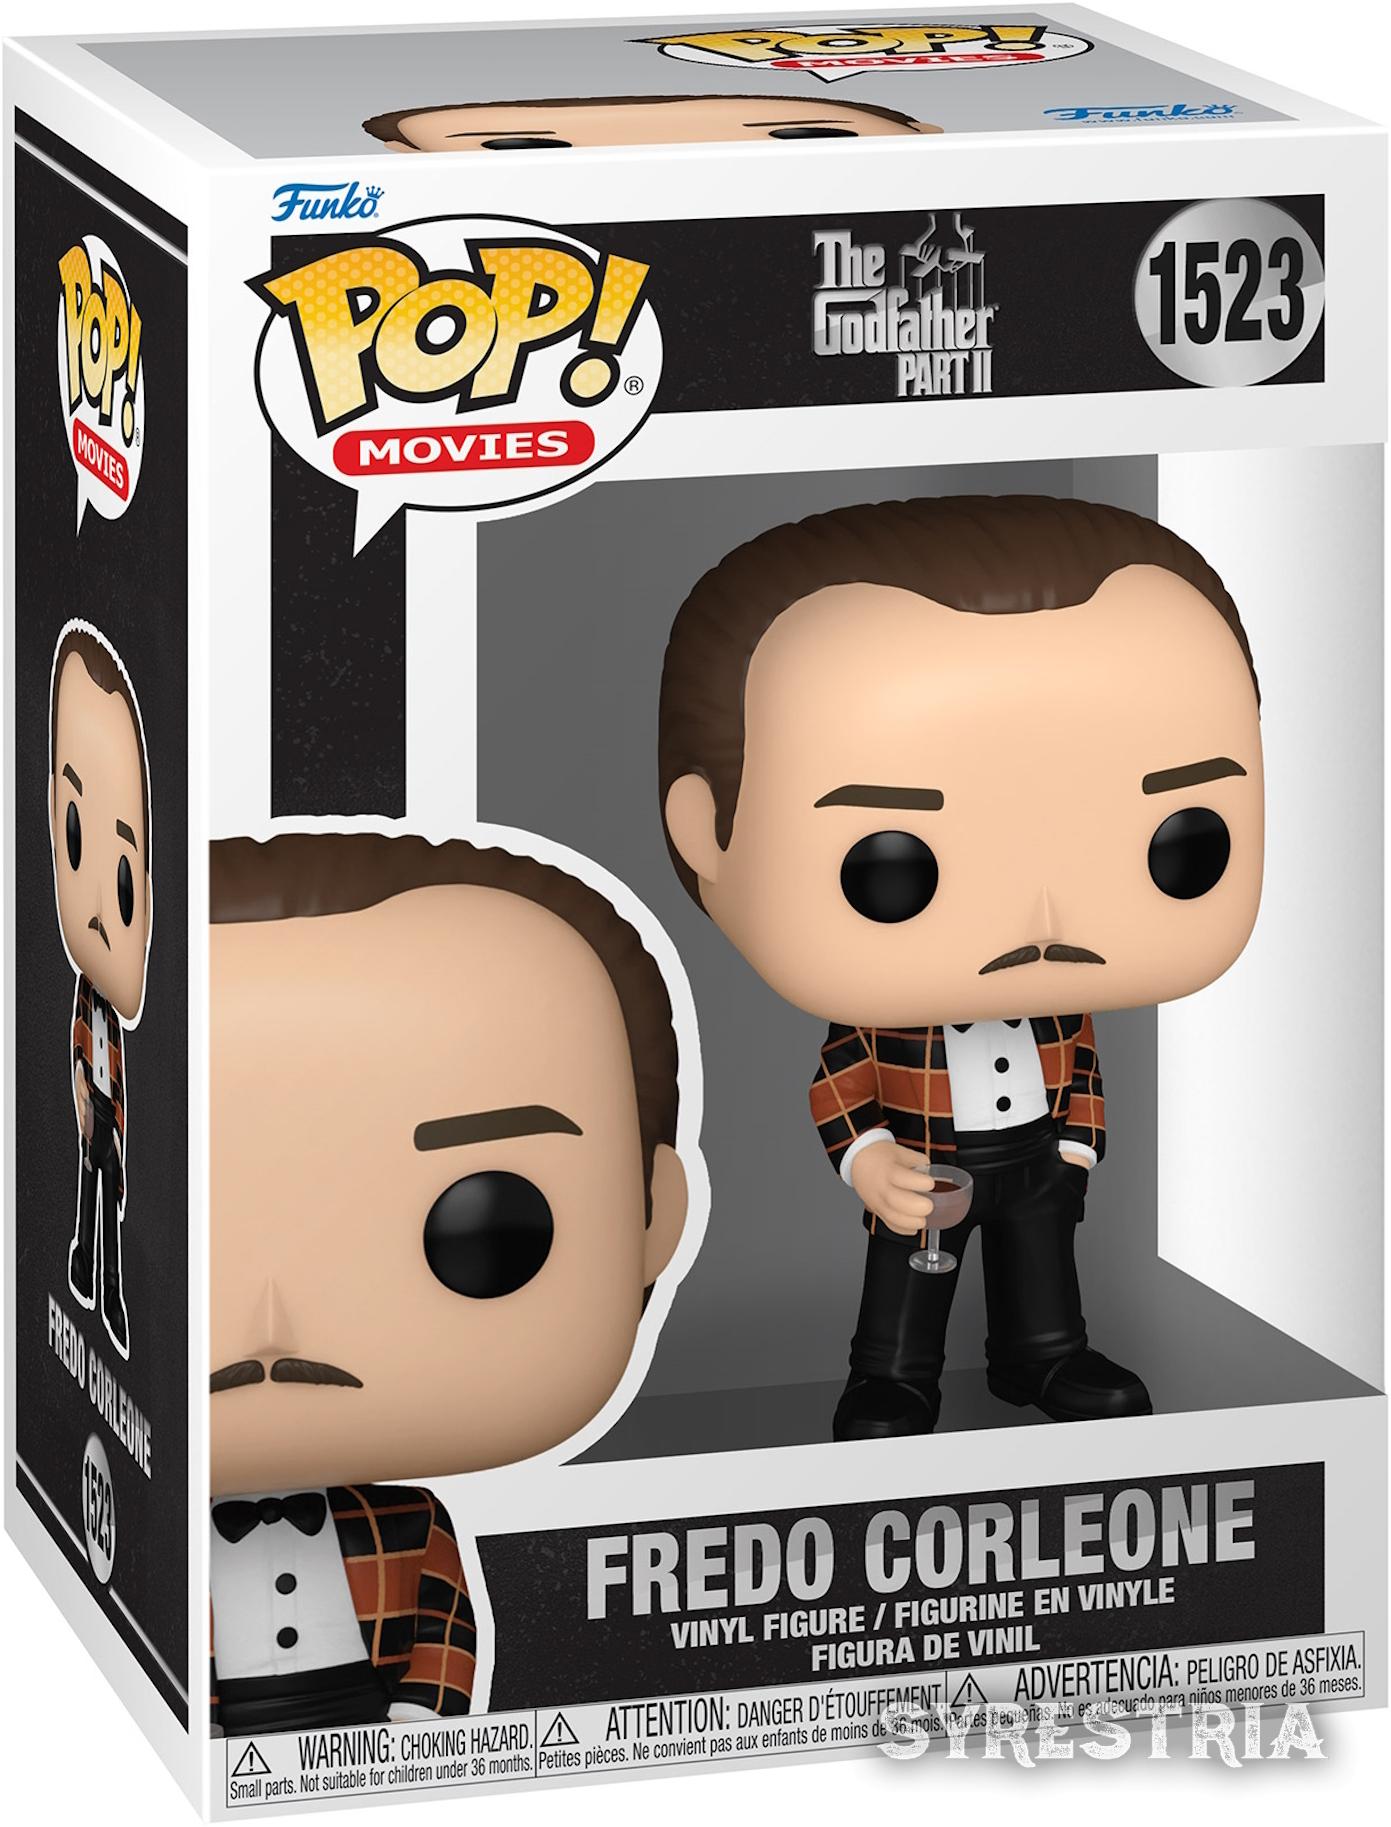 The Godfather Part 2 - Fredo Corleone 1523  - Funko Pop! Vinyl Figur